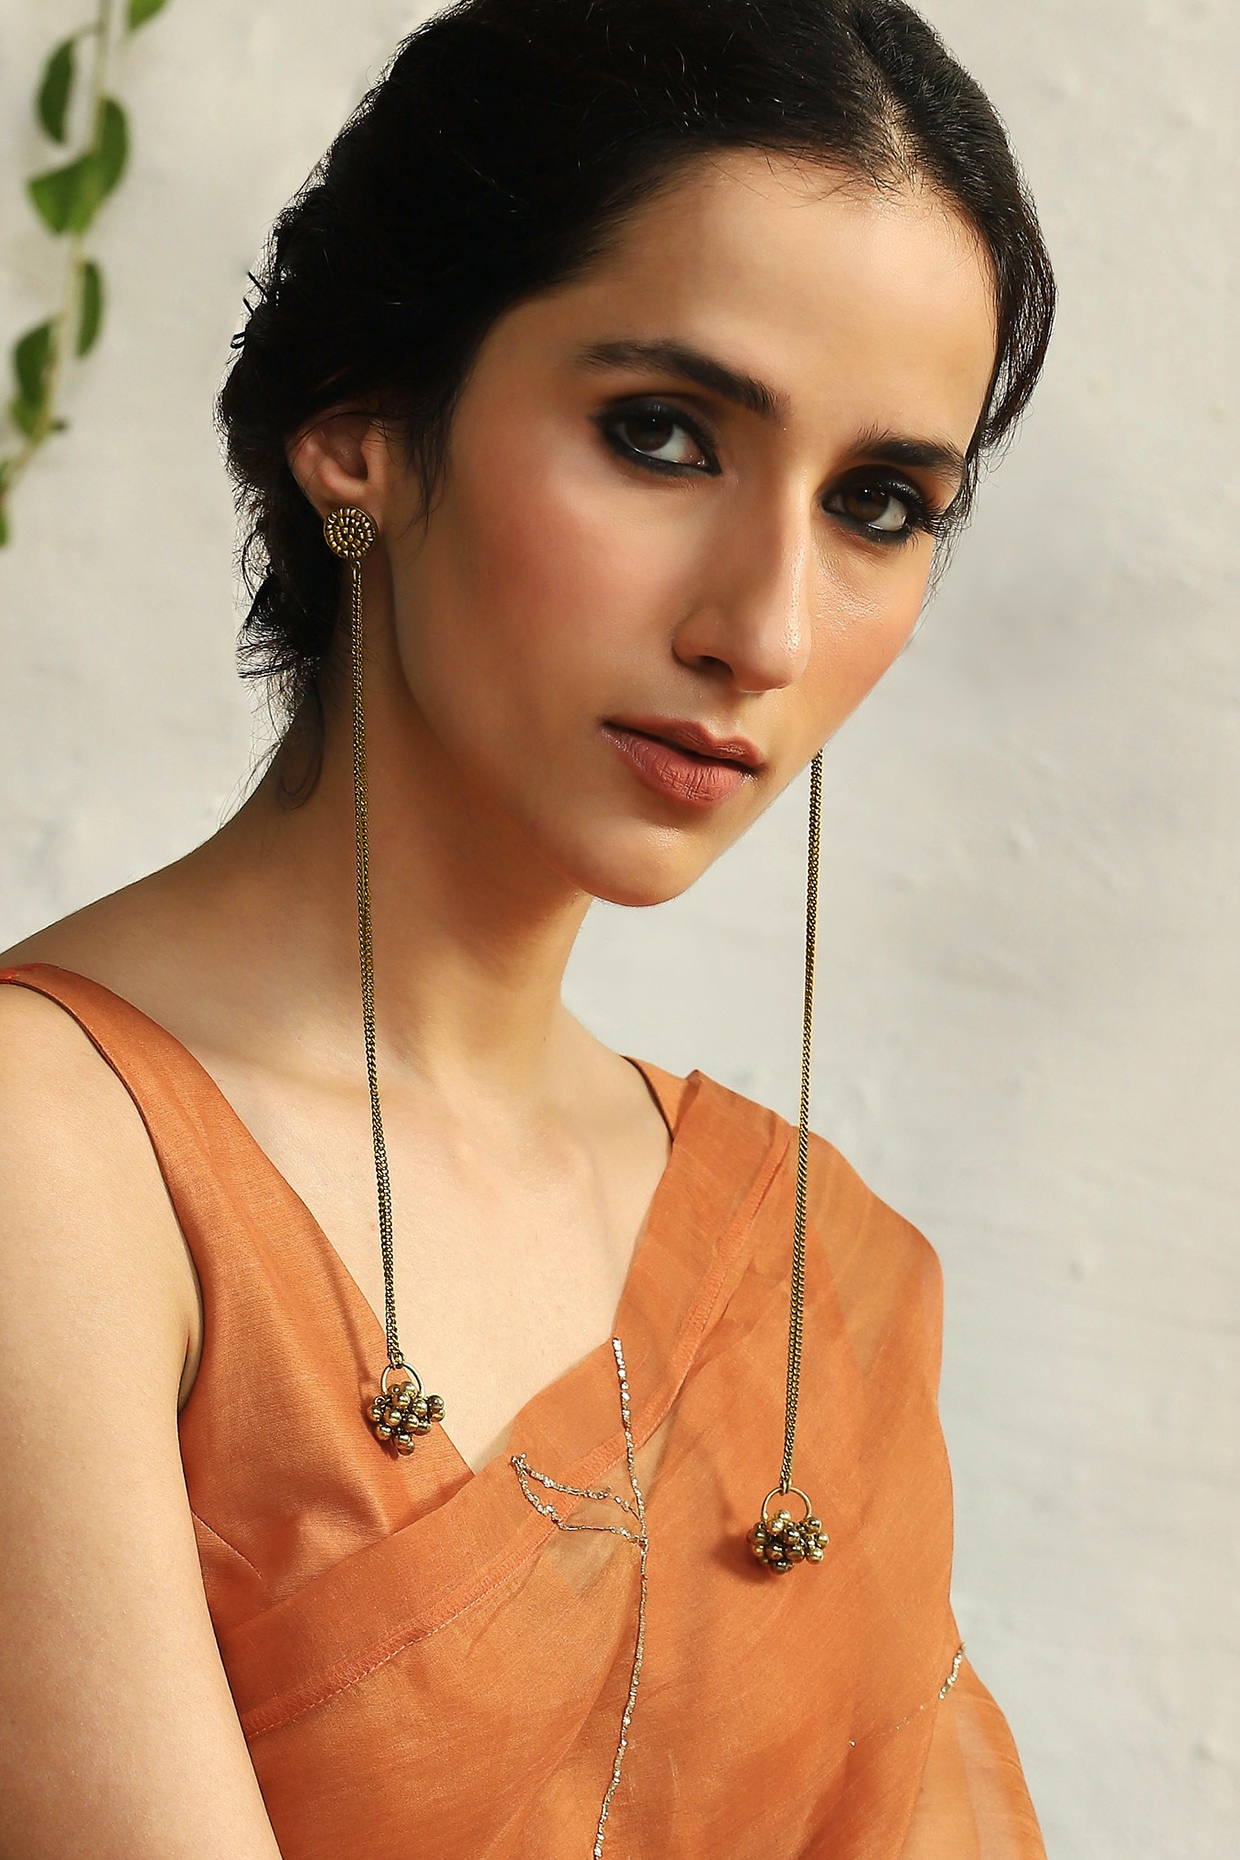 How Yami Gautam Styled Her Kashmiri Dejhoor Earrings Needs A Separate  Fashion Lesson